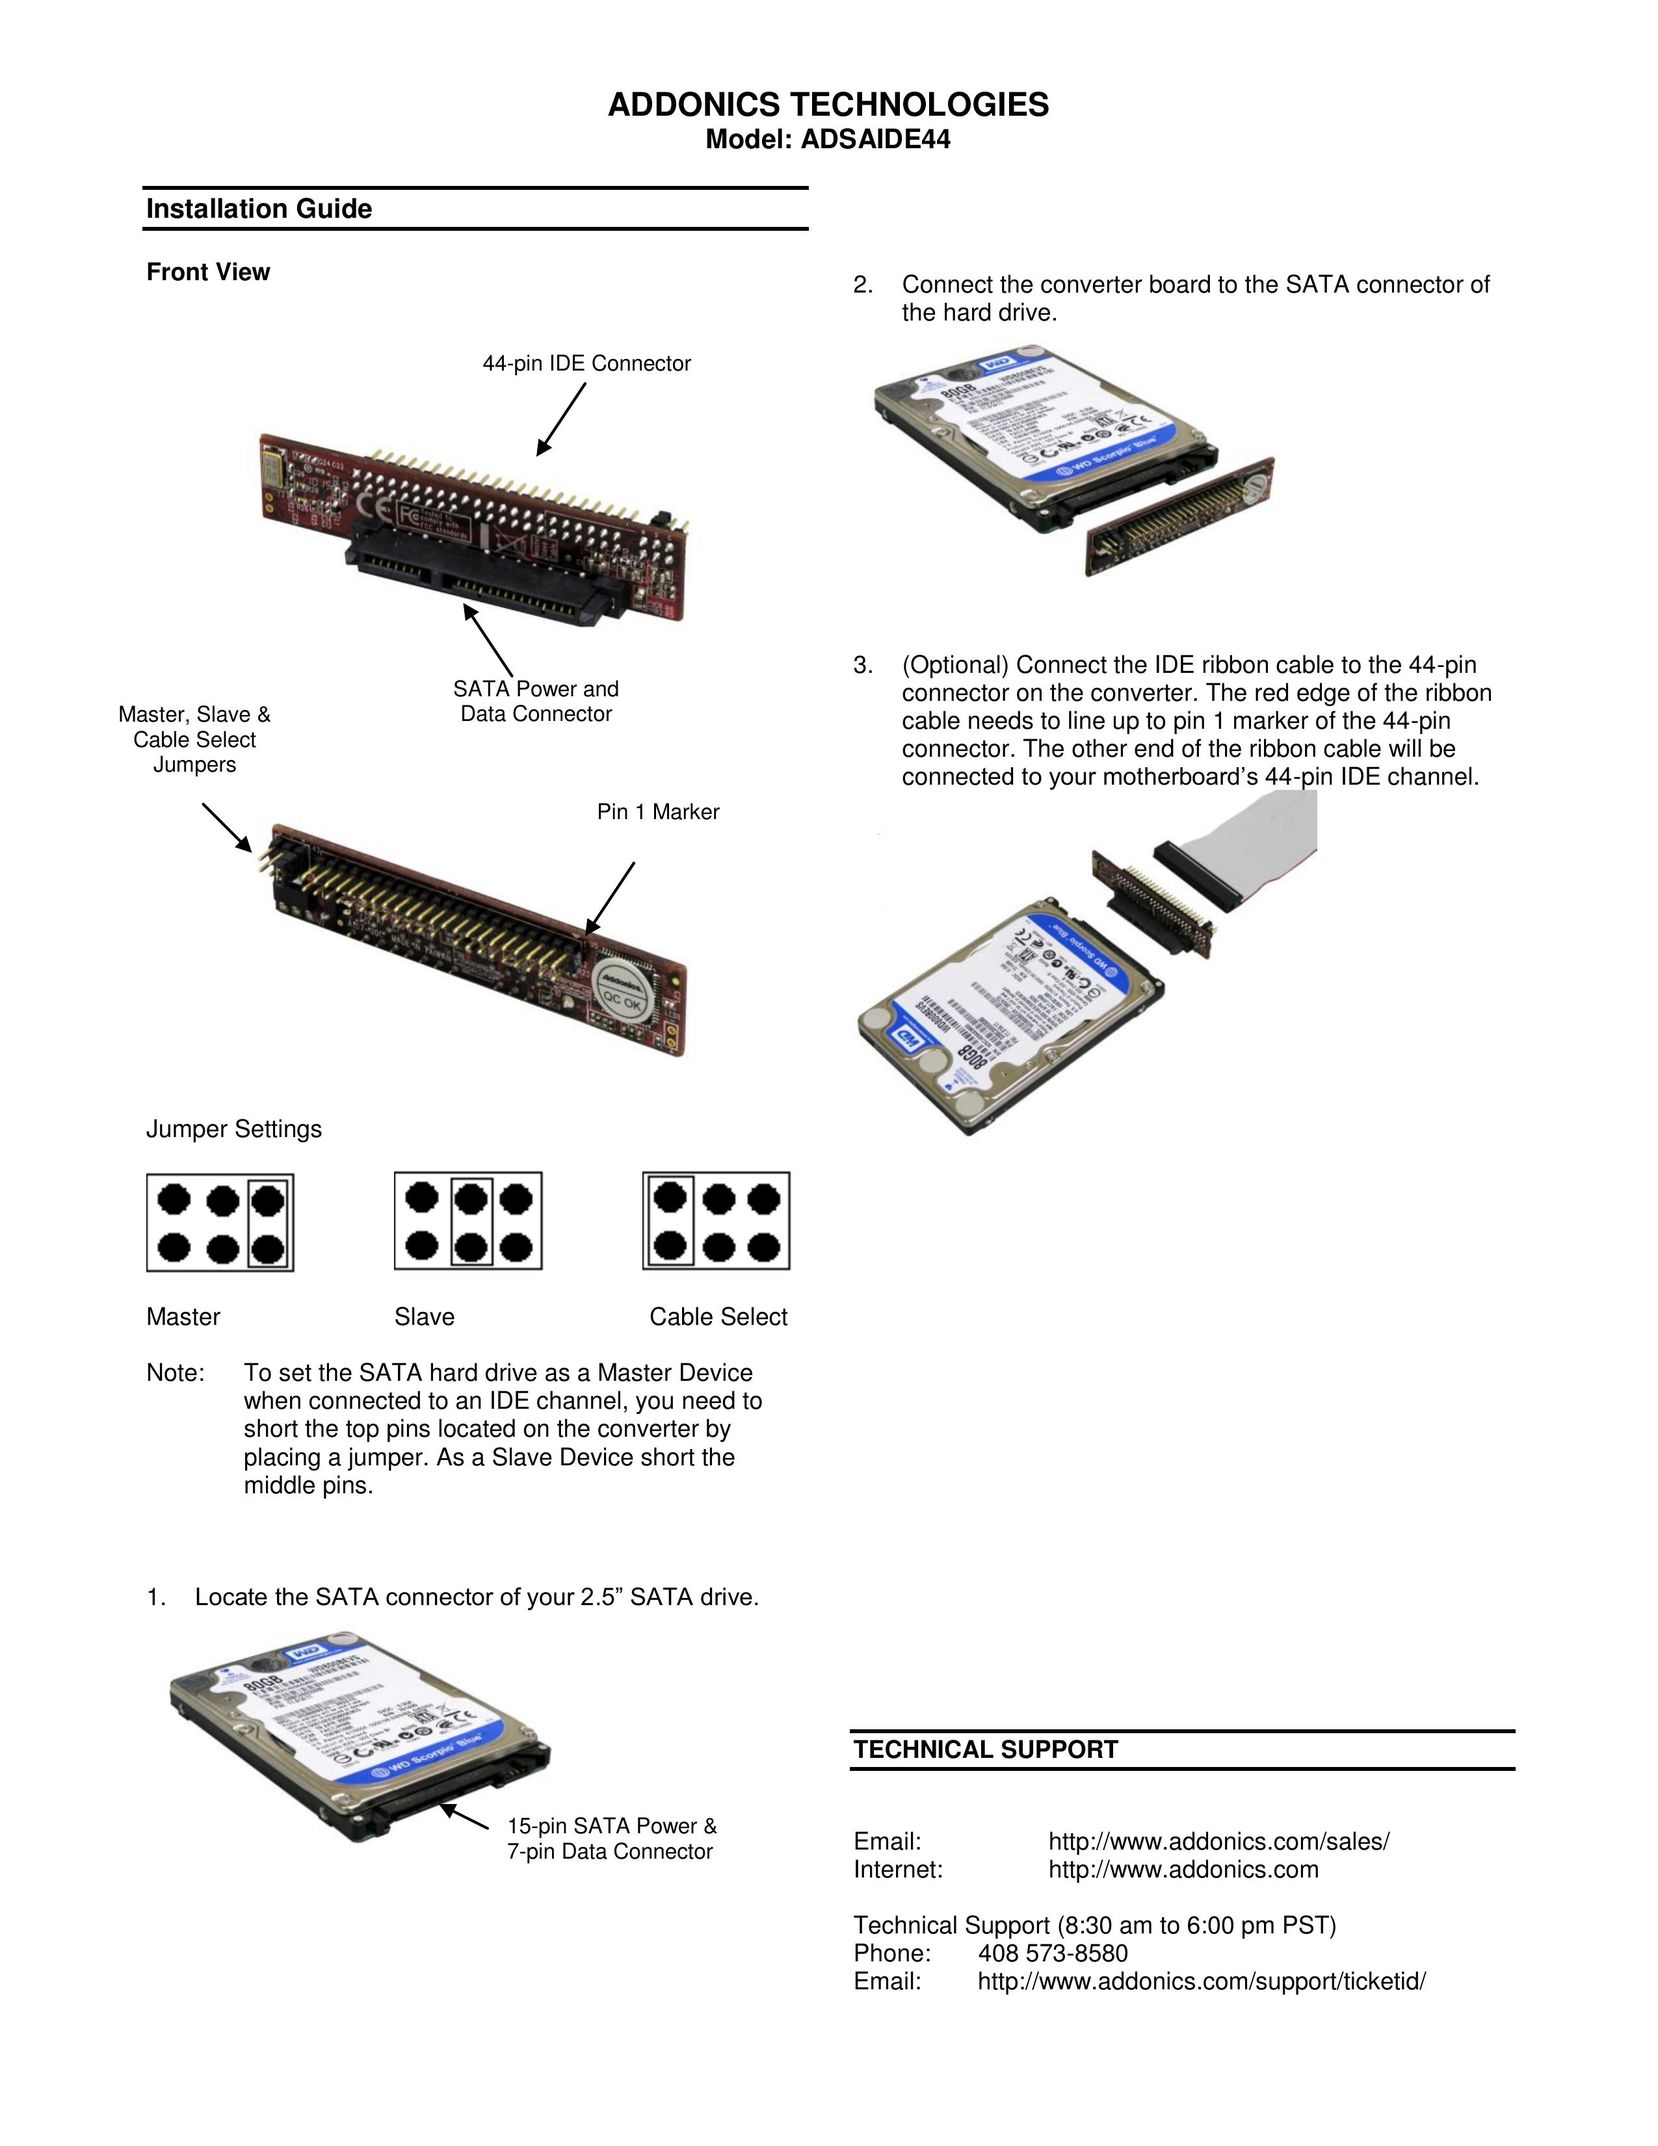 Addonics Technologies ADSAIDE44 Computer Drive User Manual